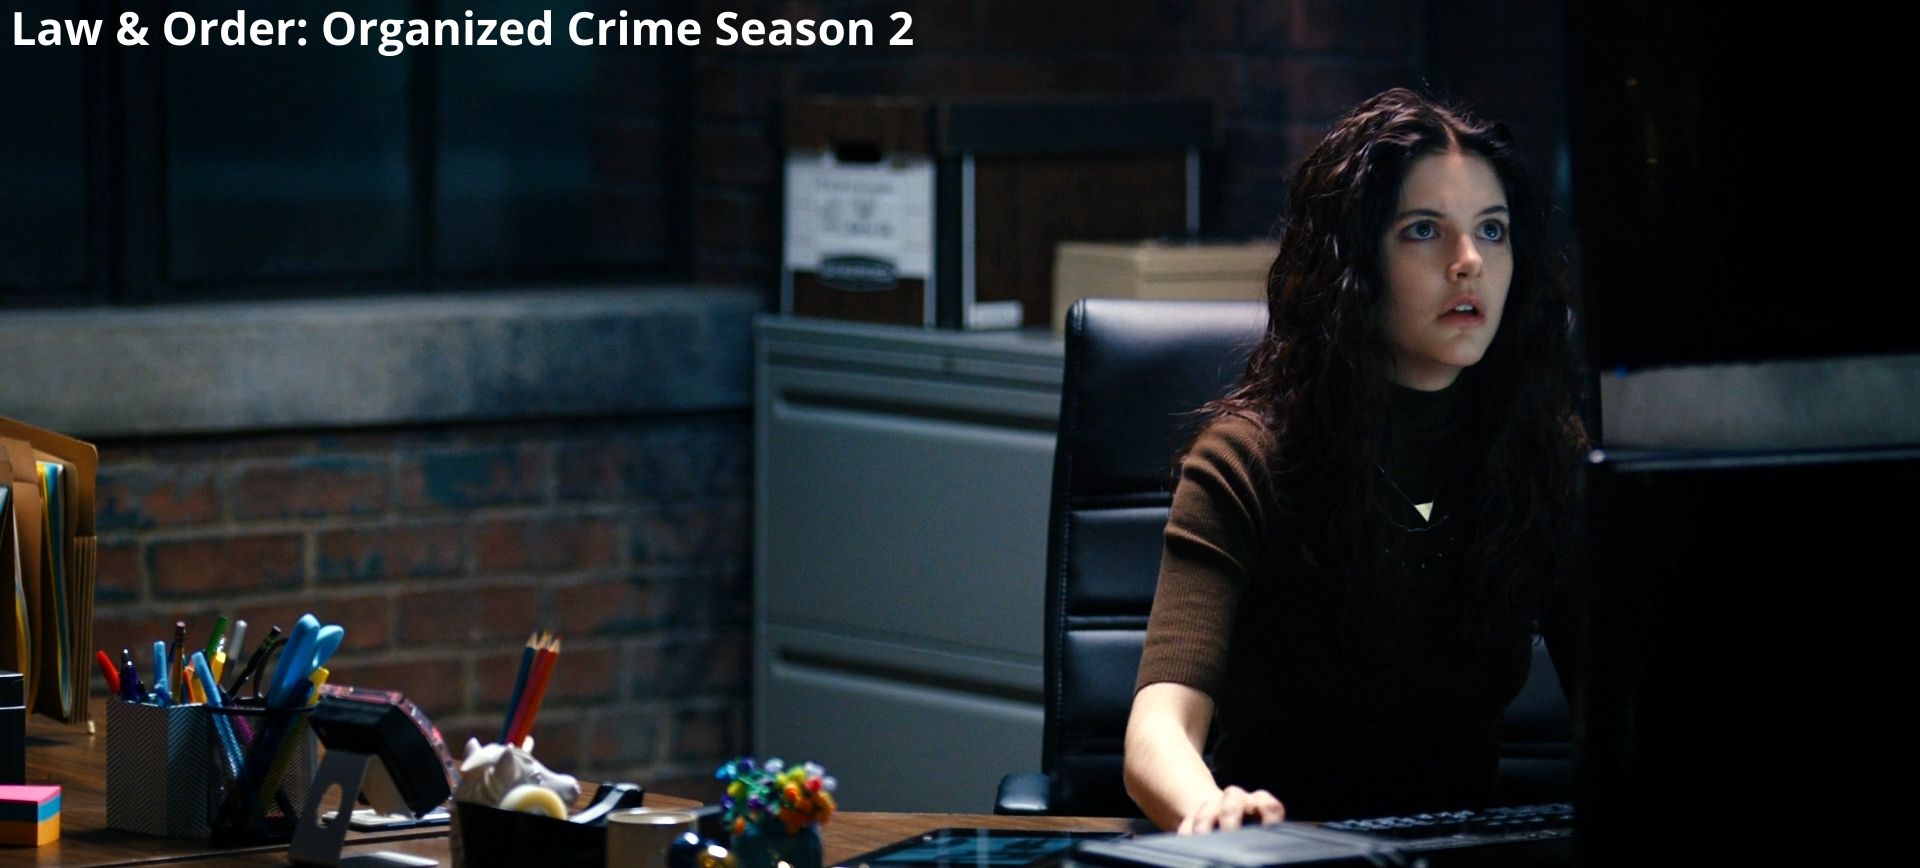 Law & Order: Organized Crime Season 2 Episode 9